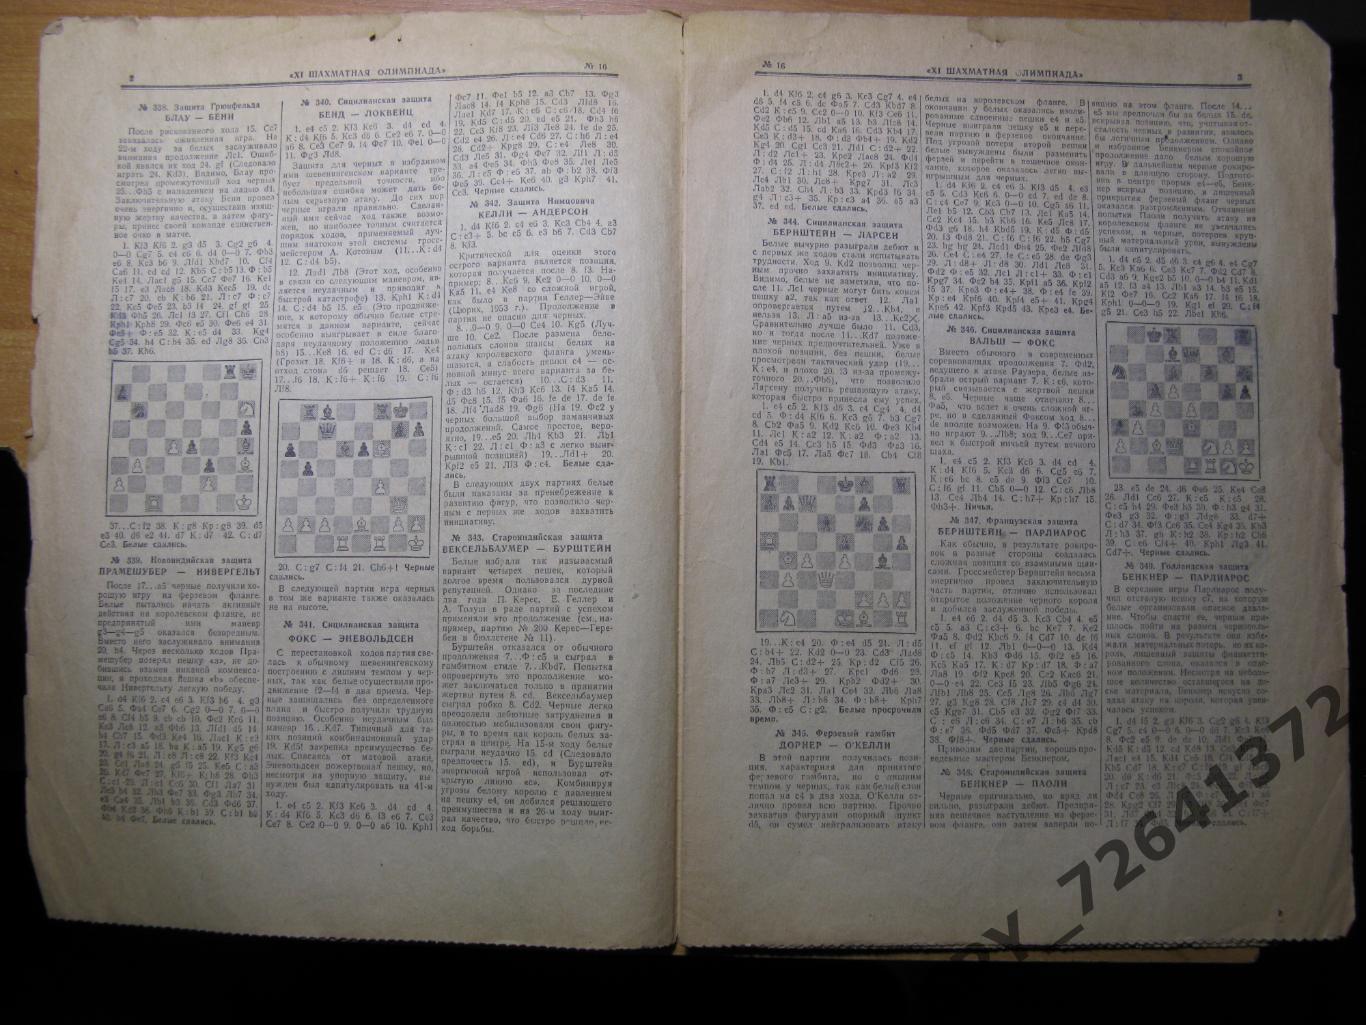 Бюллетень комитета по физкультуре и спорту 21 шахматная олимпиада.1954 г. N16 3